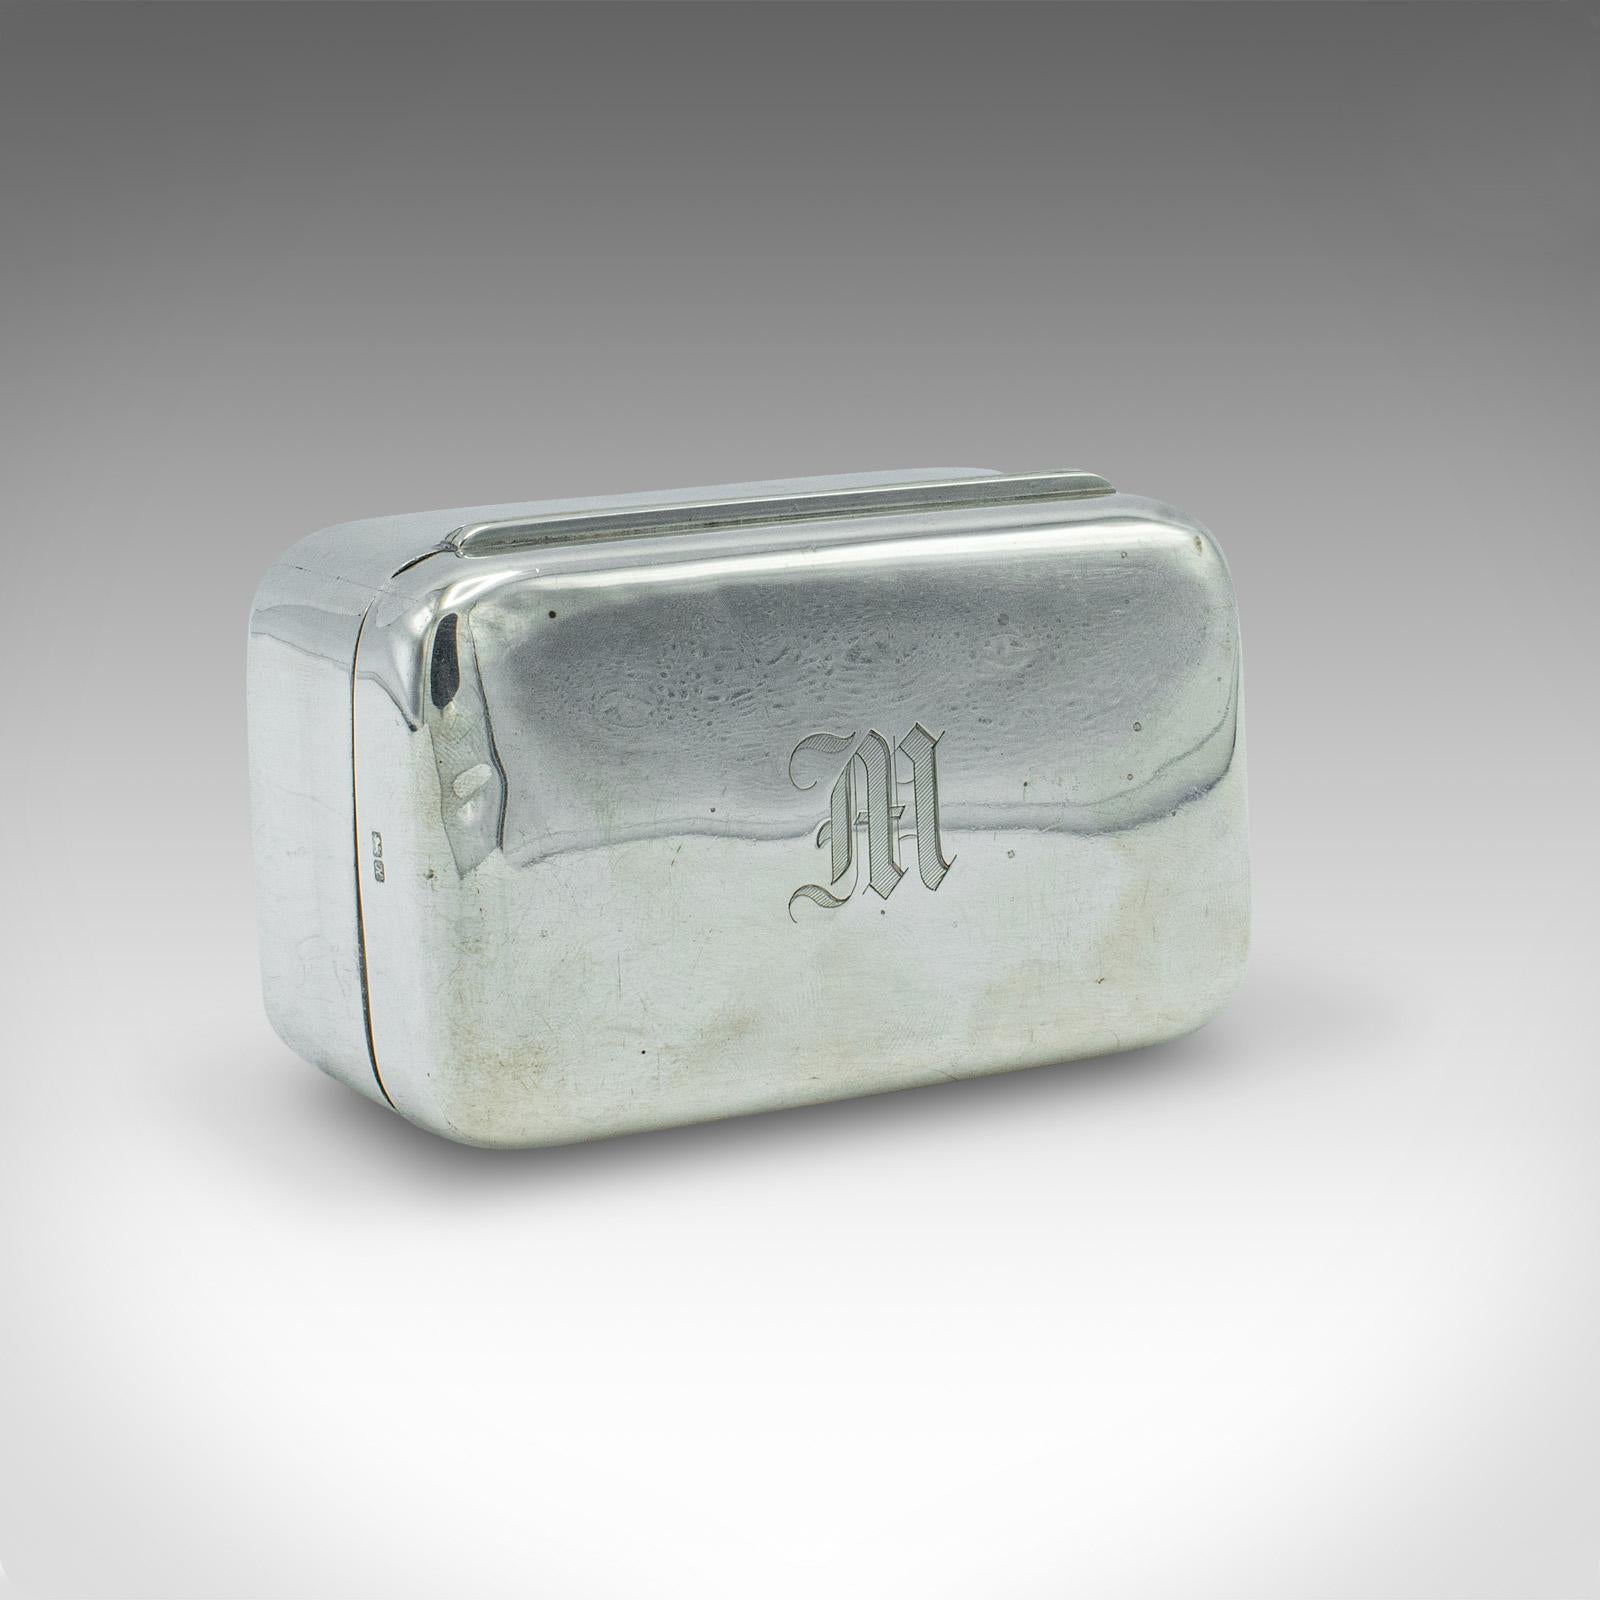 Antique Gentleman's Soap Case, English, Silver, Travelling Box, Edwardian, 1910 1